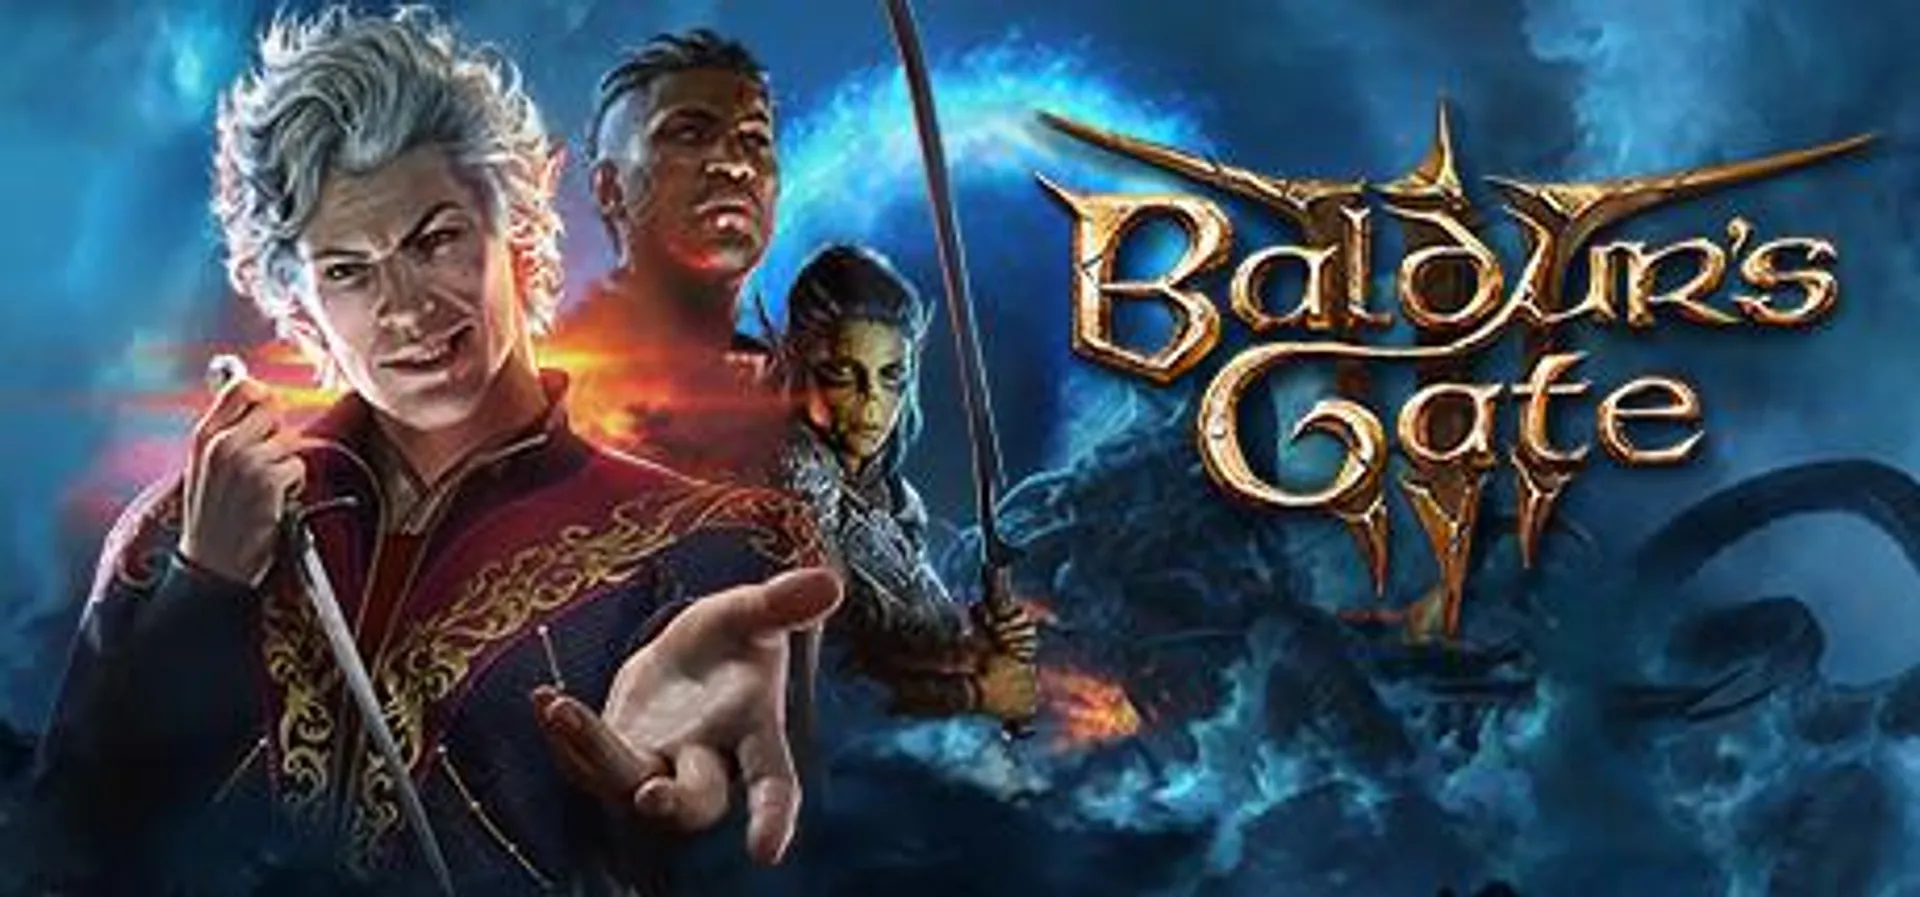 Save 10% on Baldur's Gate 3 on Steam